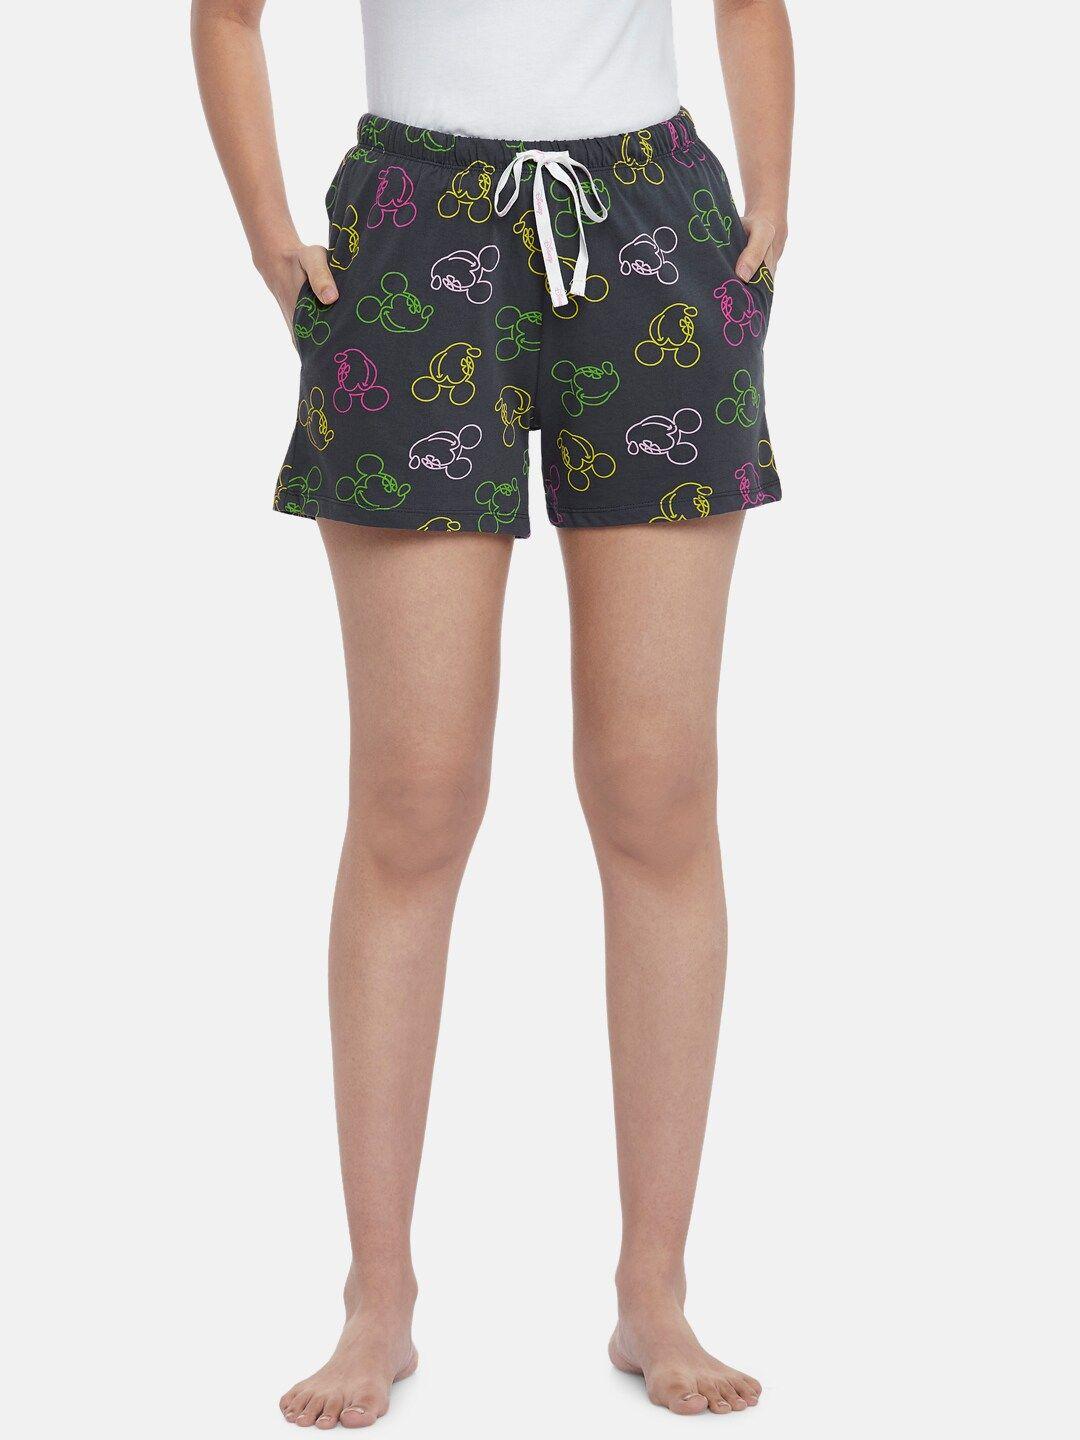 dreamz by pantaloons women printed lounge shorts